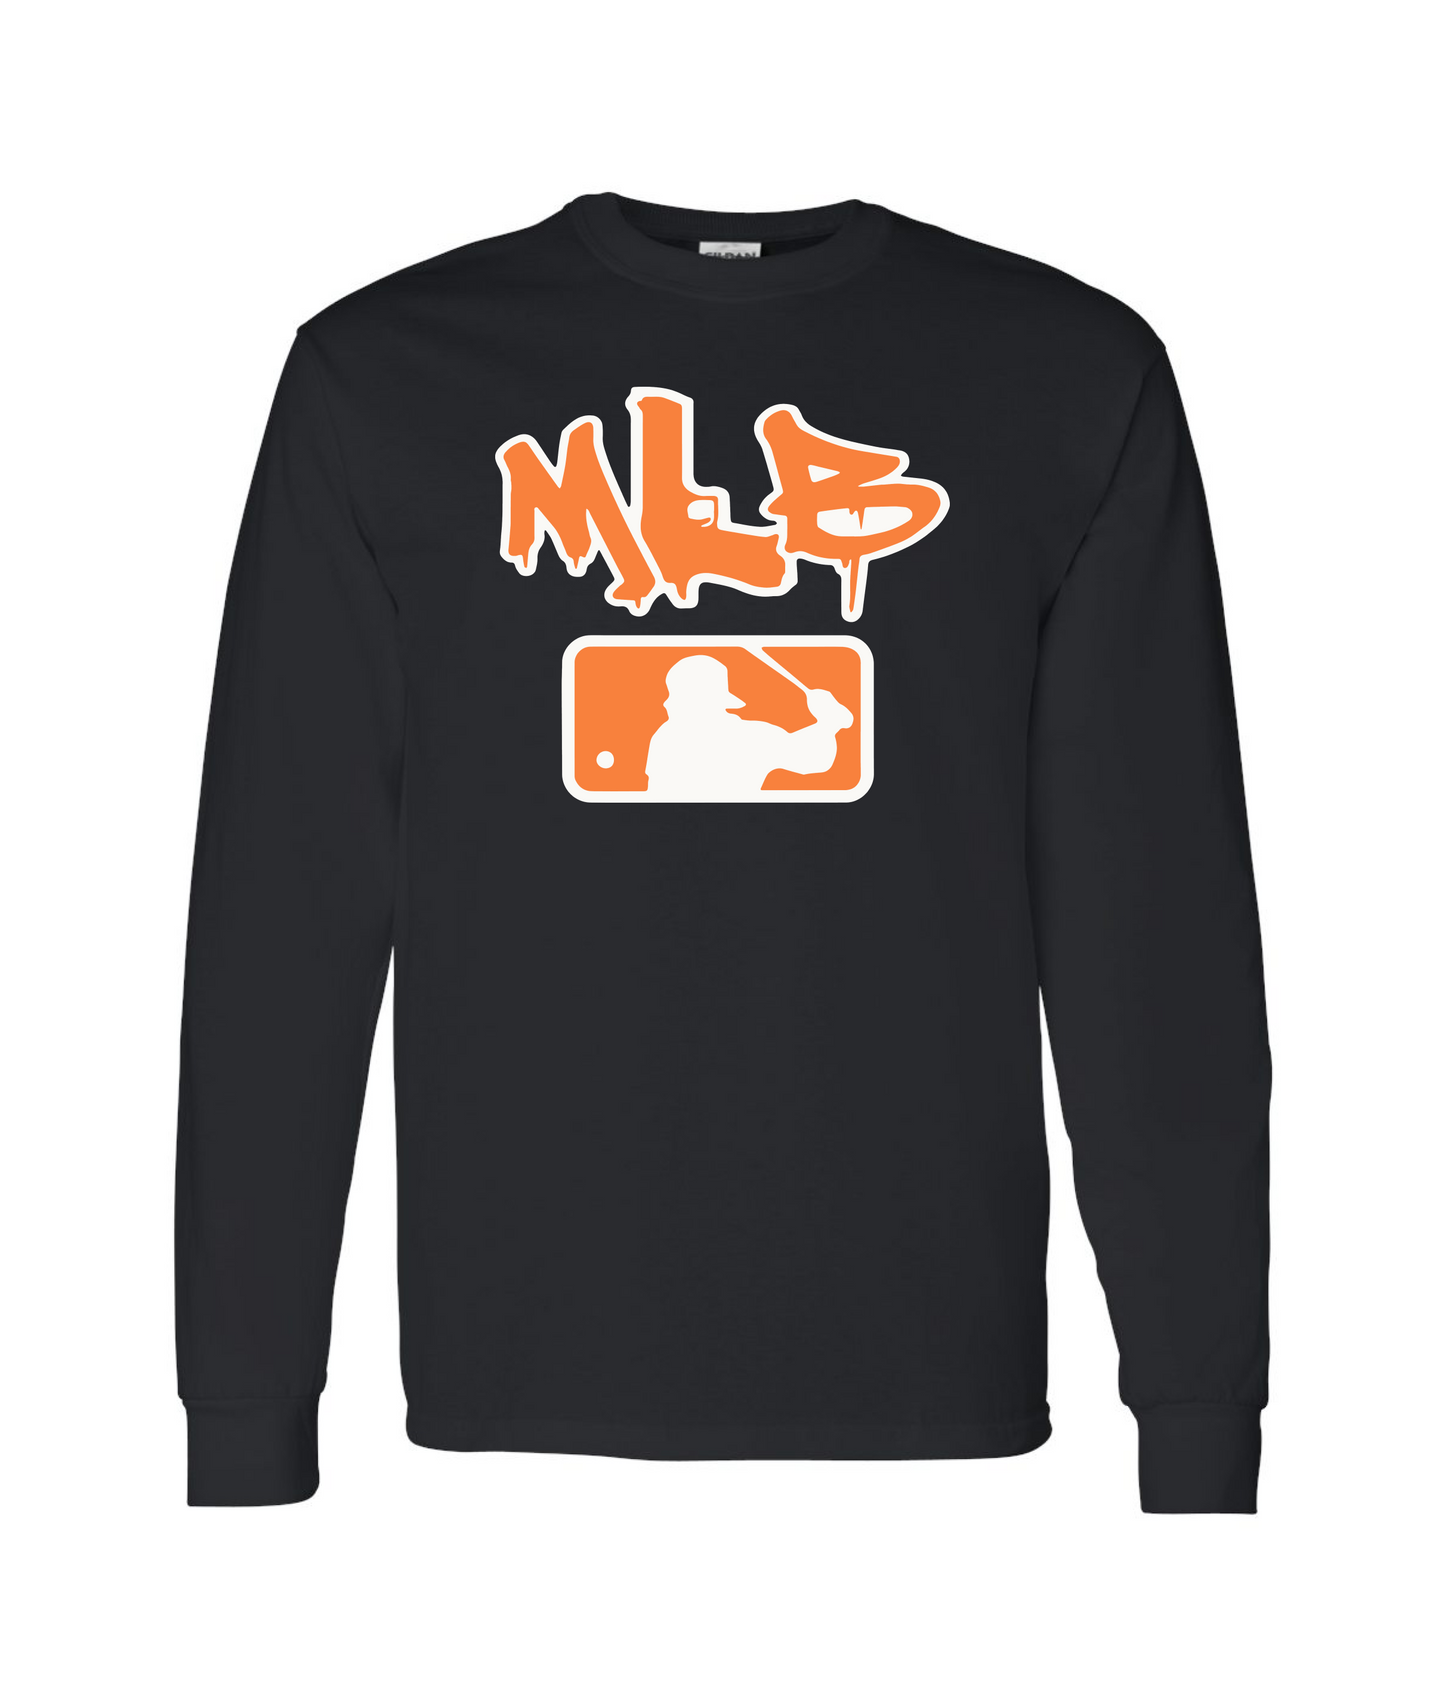 More Like Brothers Apparel - MLB Orange - Black Long Sleeve T